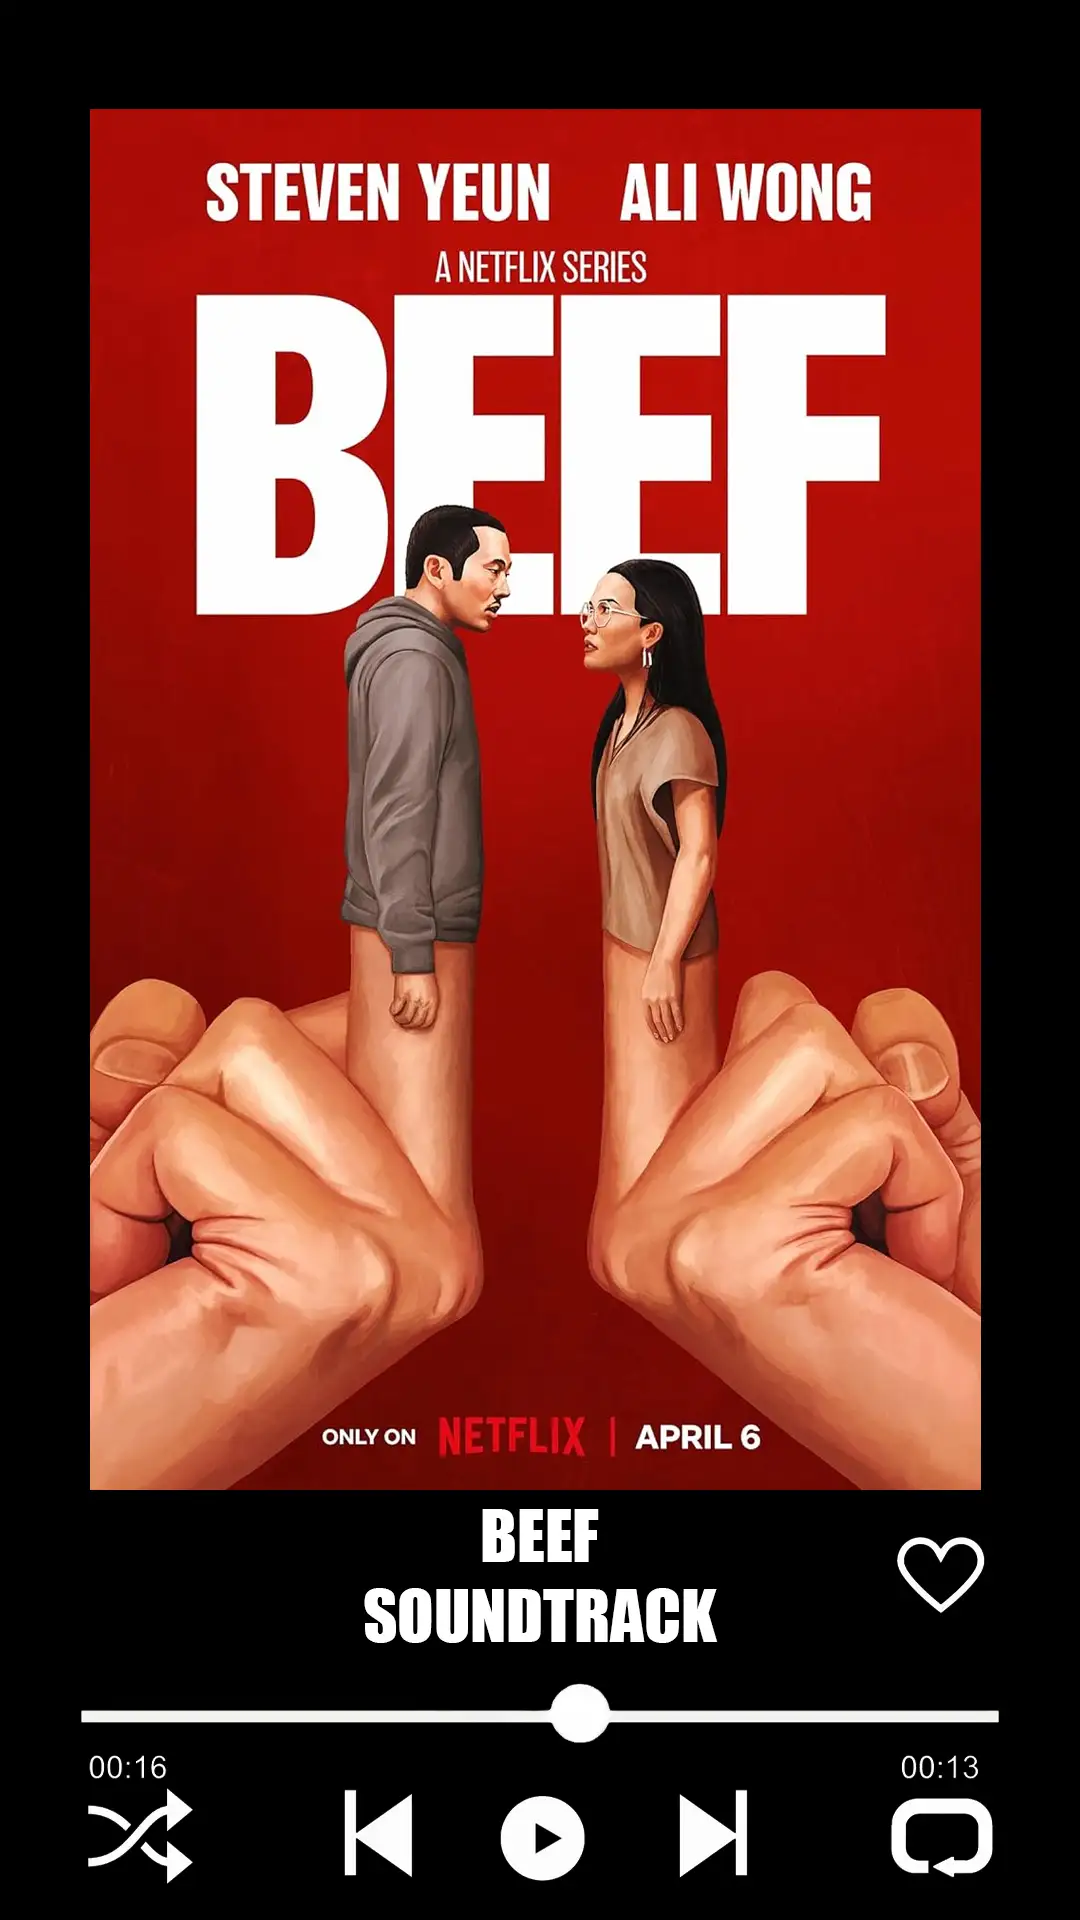 Beef Soundtrack Netflix